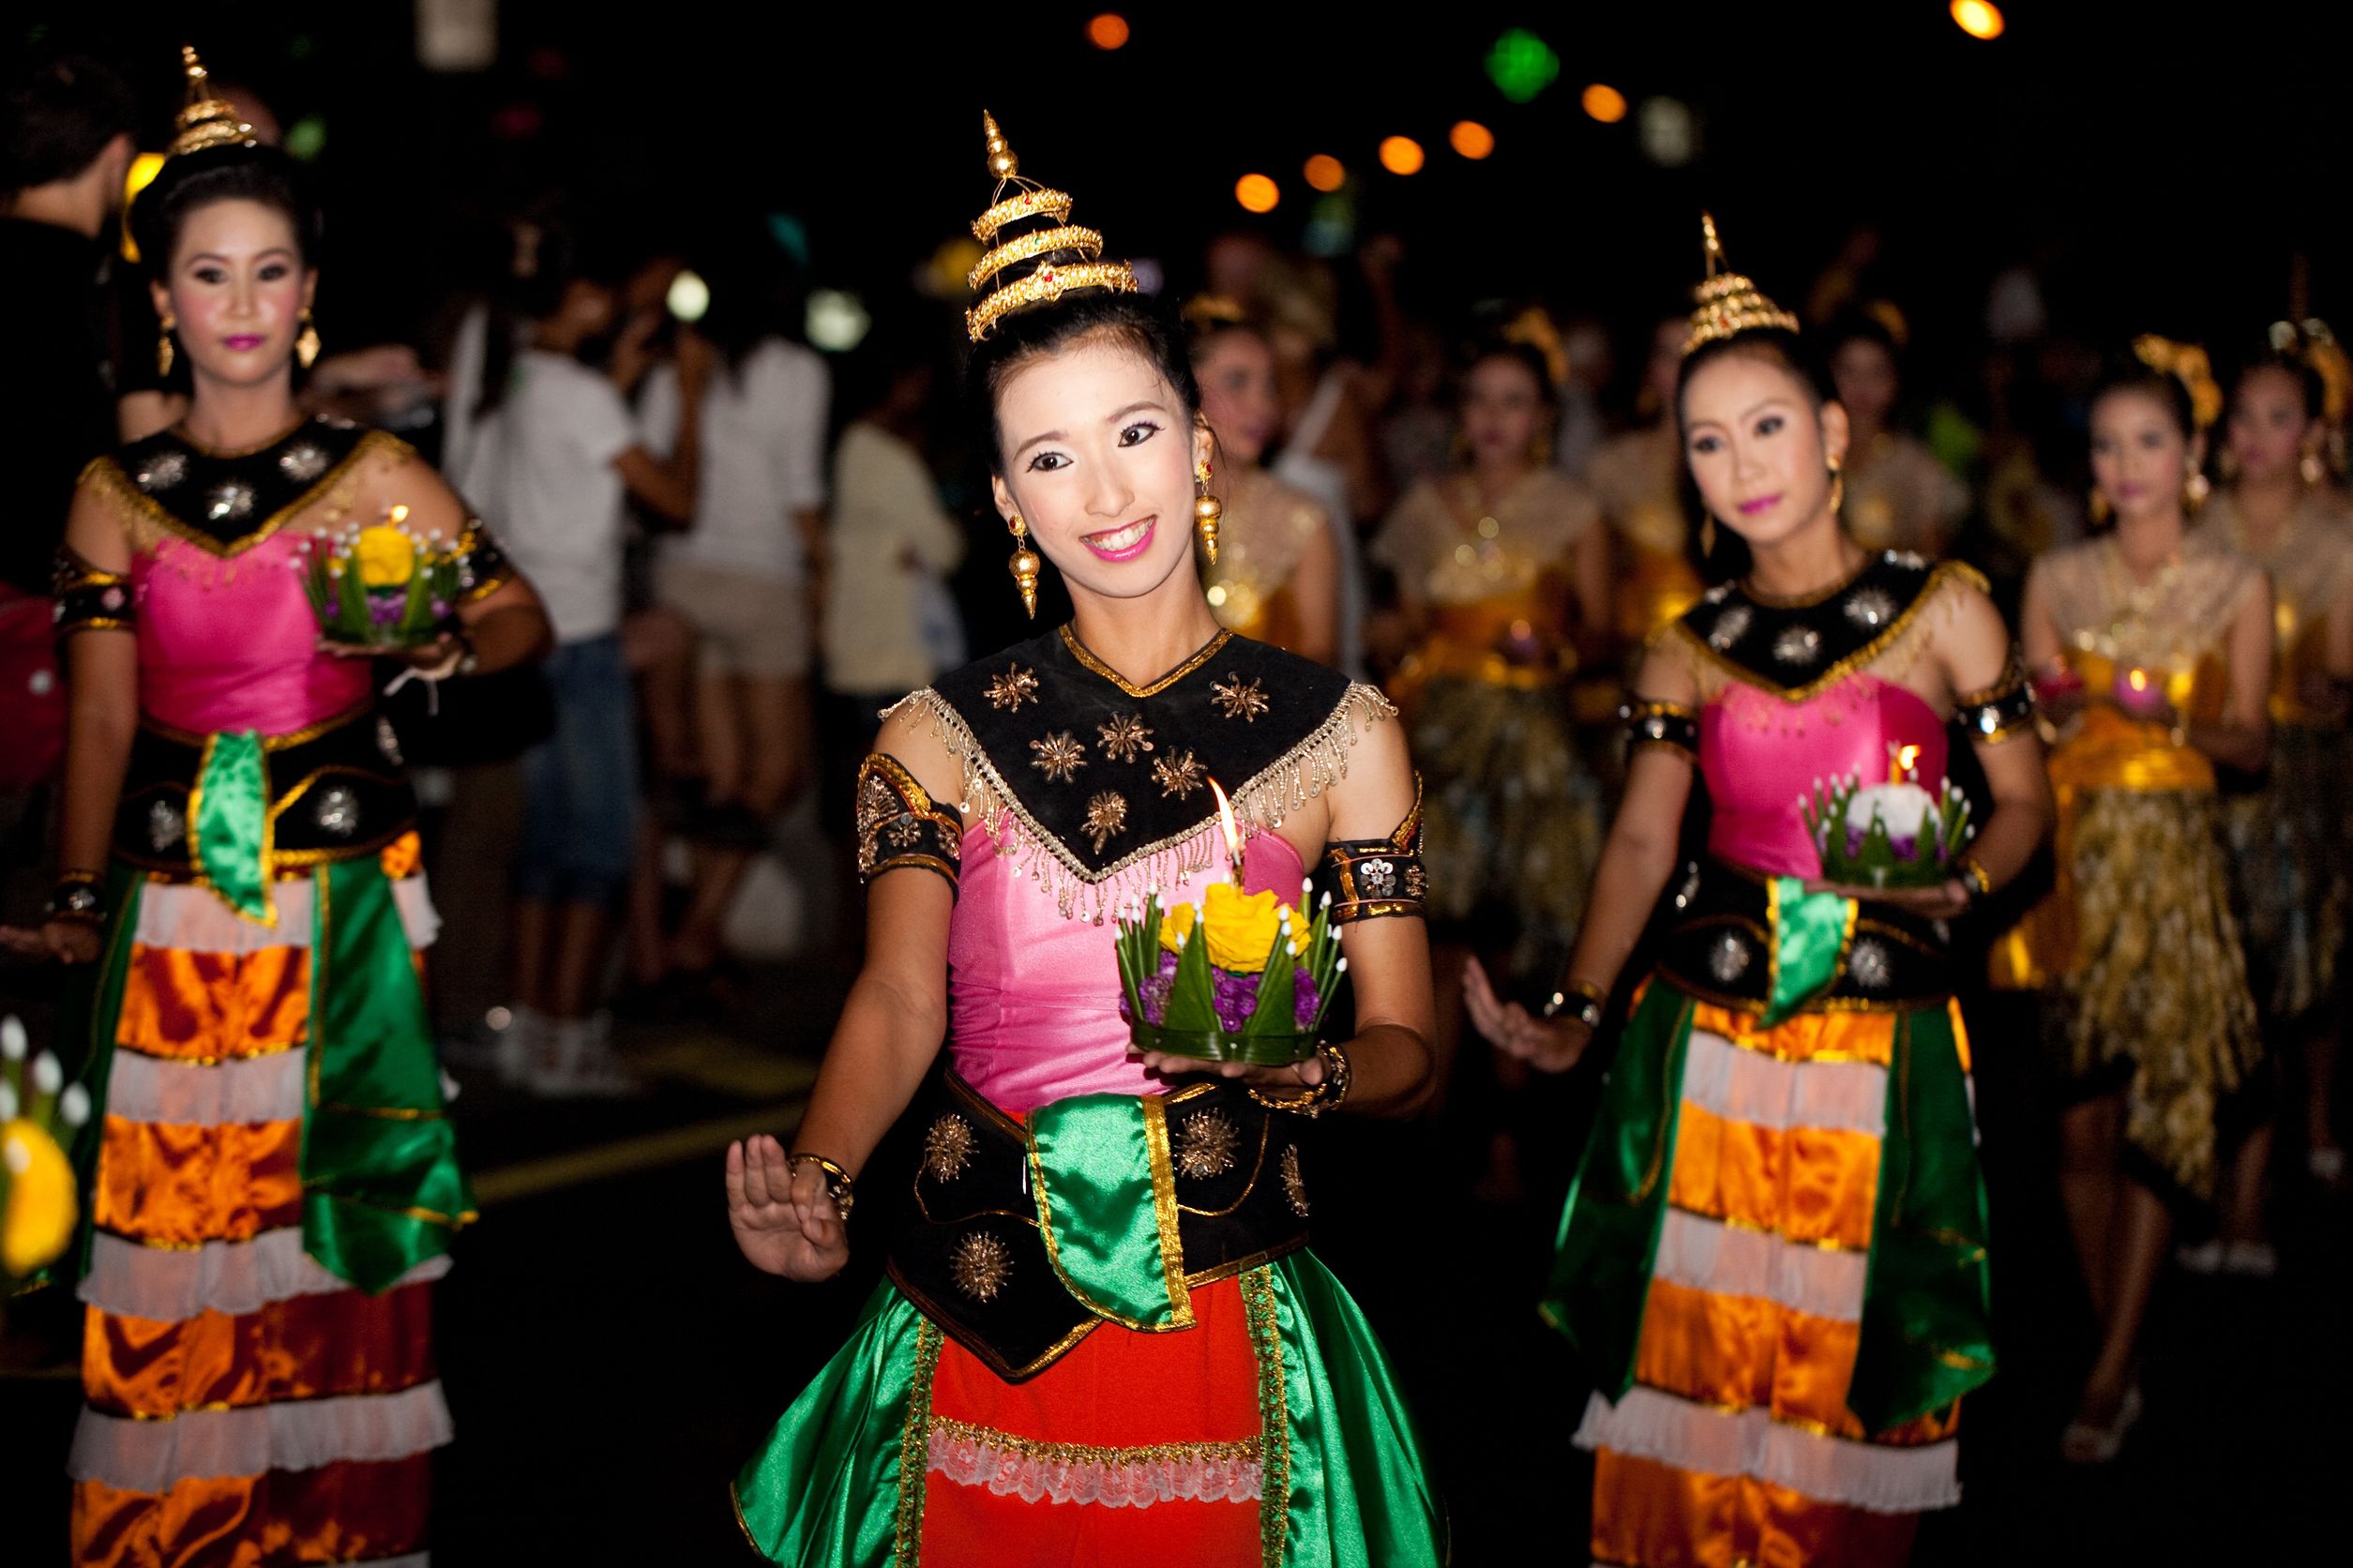 tourism event in thailand